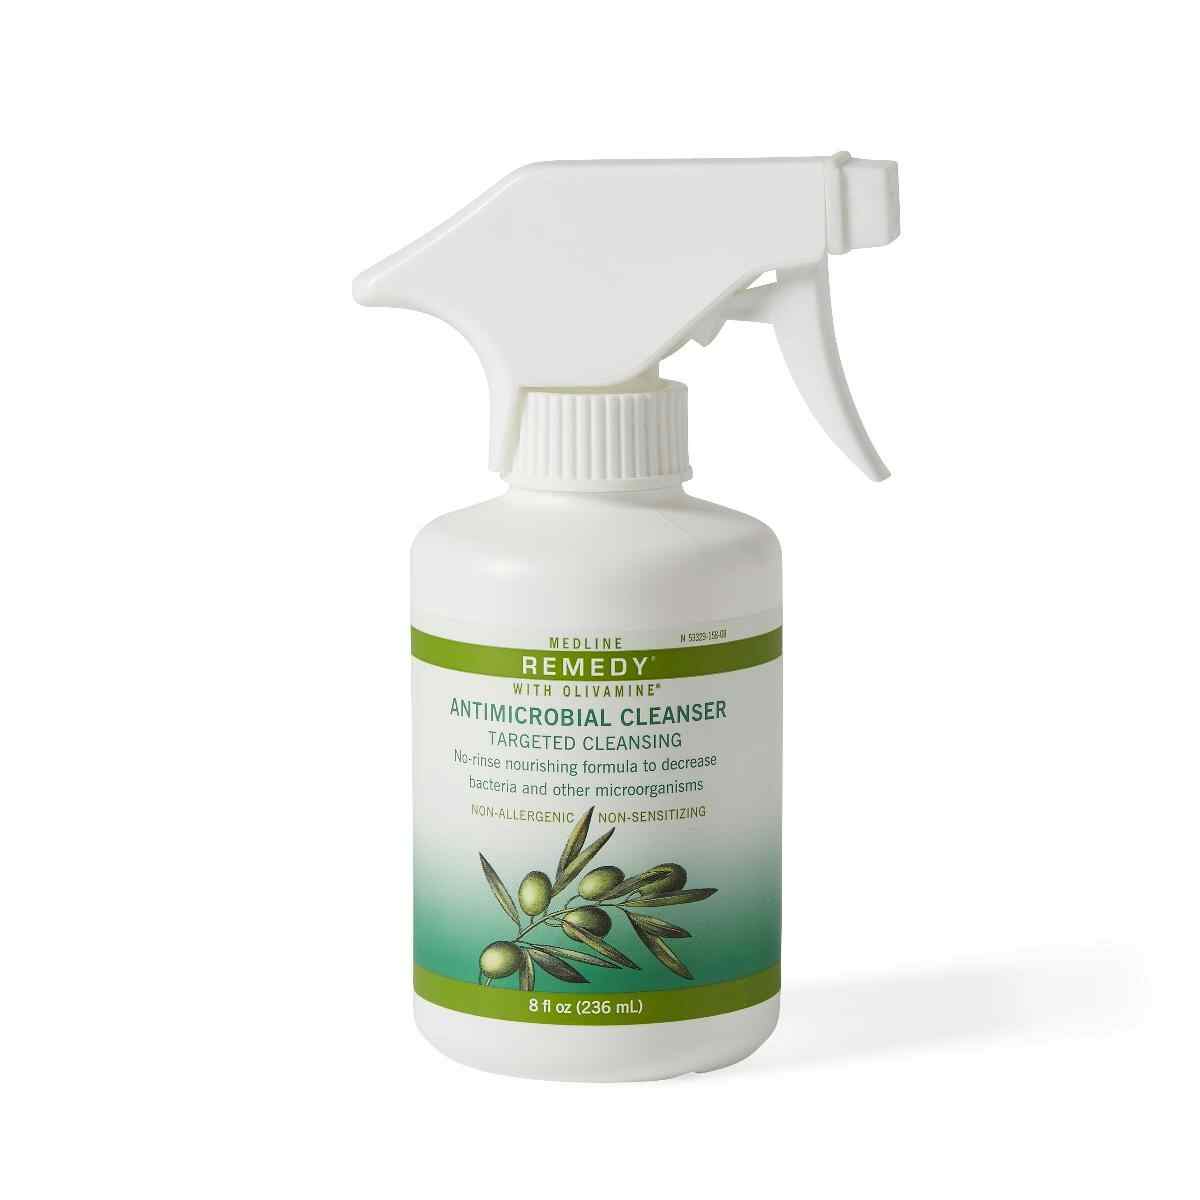 Remedy Olivamine Antimicrobial Skin Cleanser, Spray, MSC094208H, 8 oz. - 1 Each